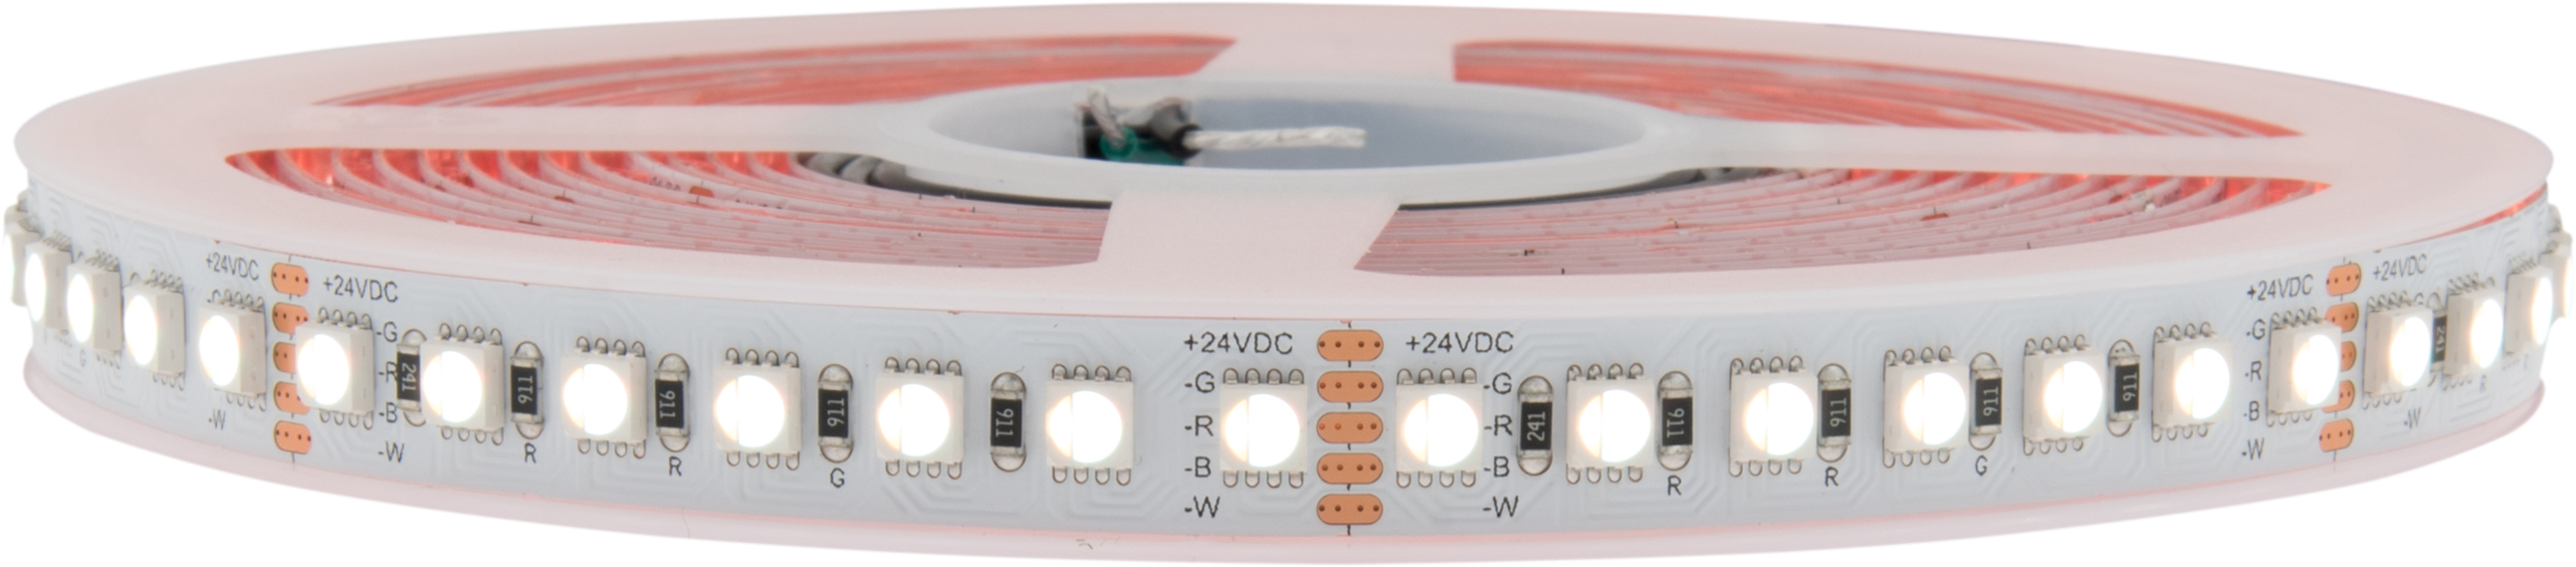 LED Flexstrip 80 ECO 4in1 RGB Warm White (RGBWW) - IP20 - CRI/RA 90+